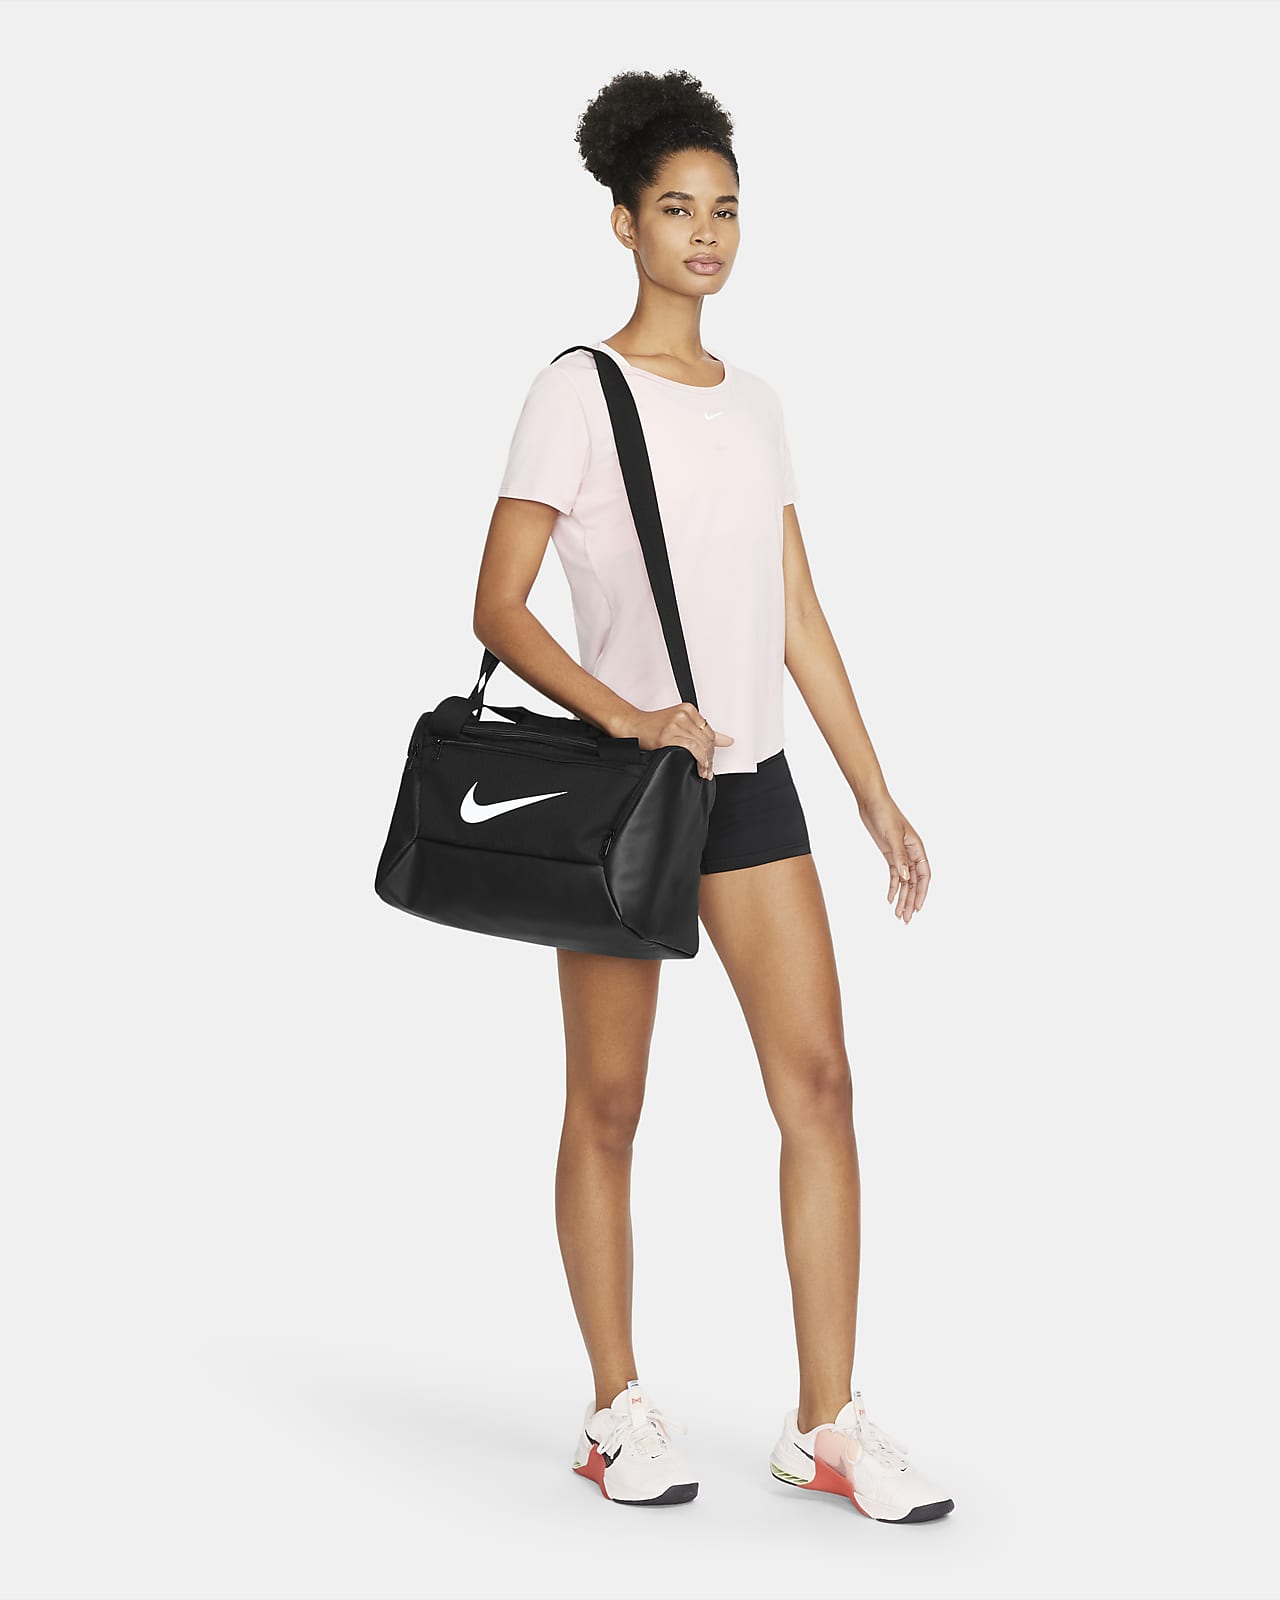 Productiviteit Soedan Huisdieren Nike Brasilia 9.5 Training Duffel Bag (Extra-Small, 25L). Nike PH